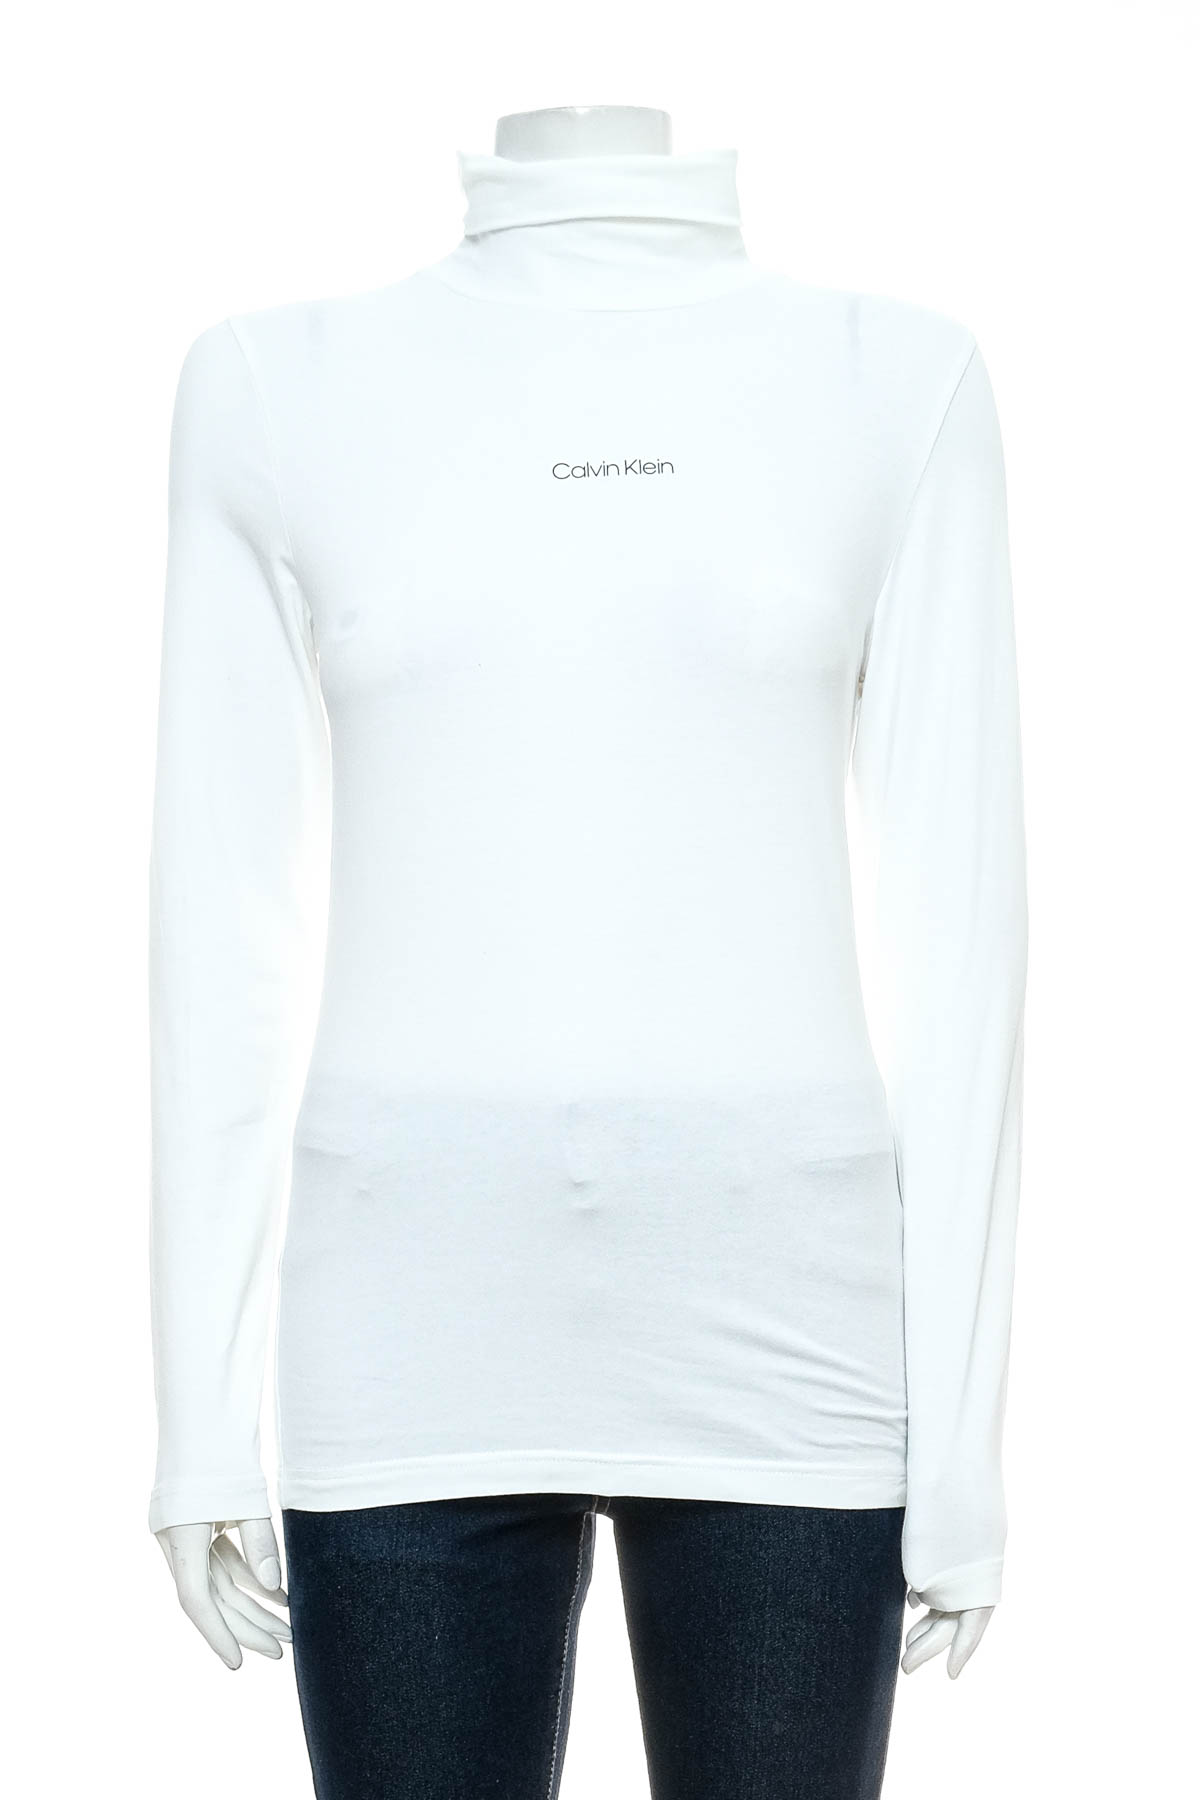 Women's blouse - Calvin Klein - 0